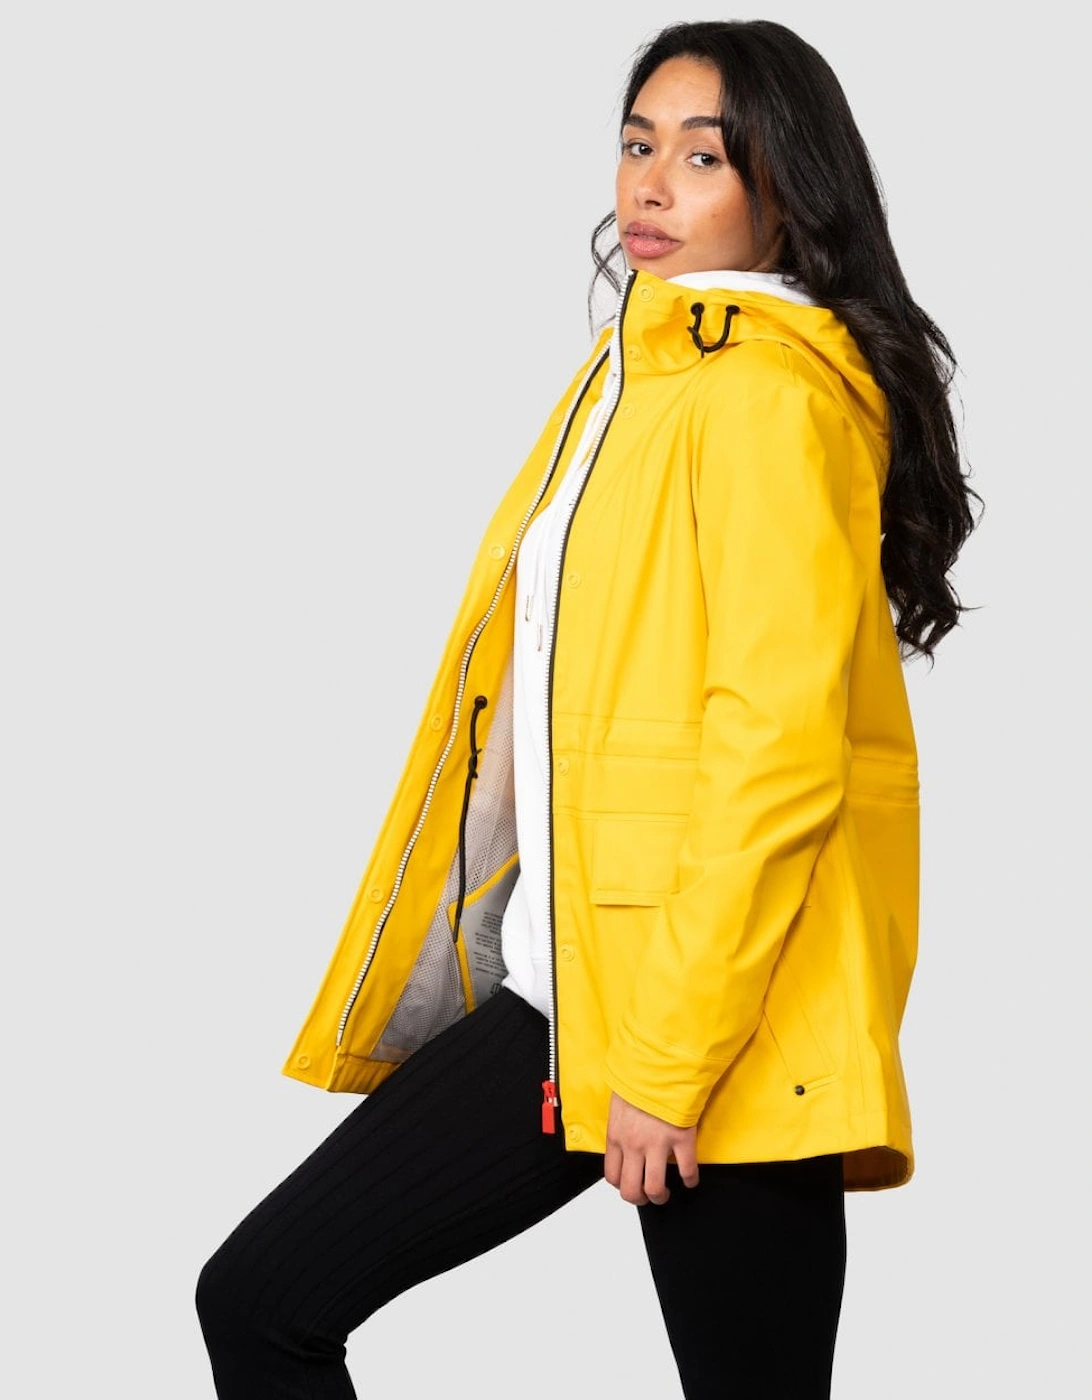 Womens Rain Jacket